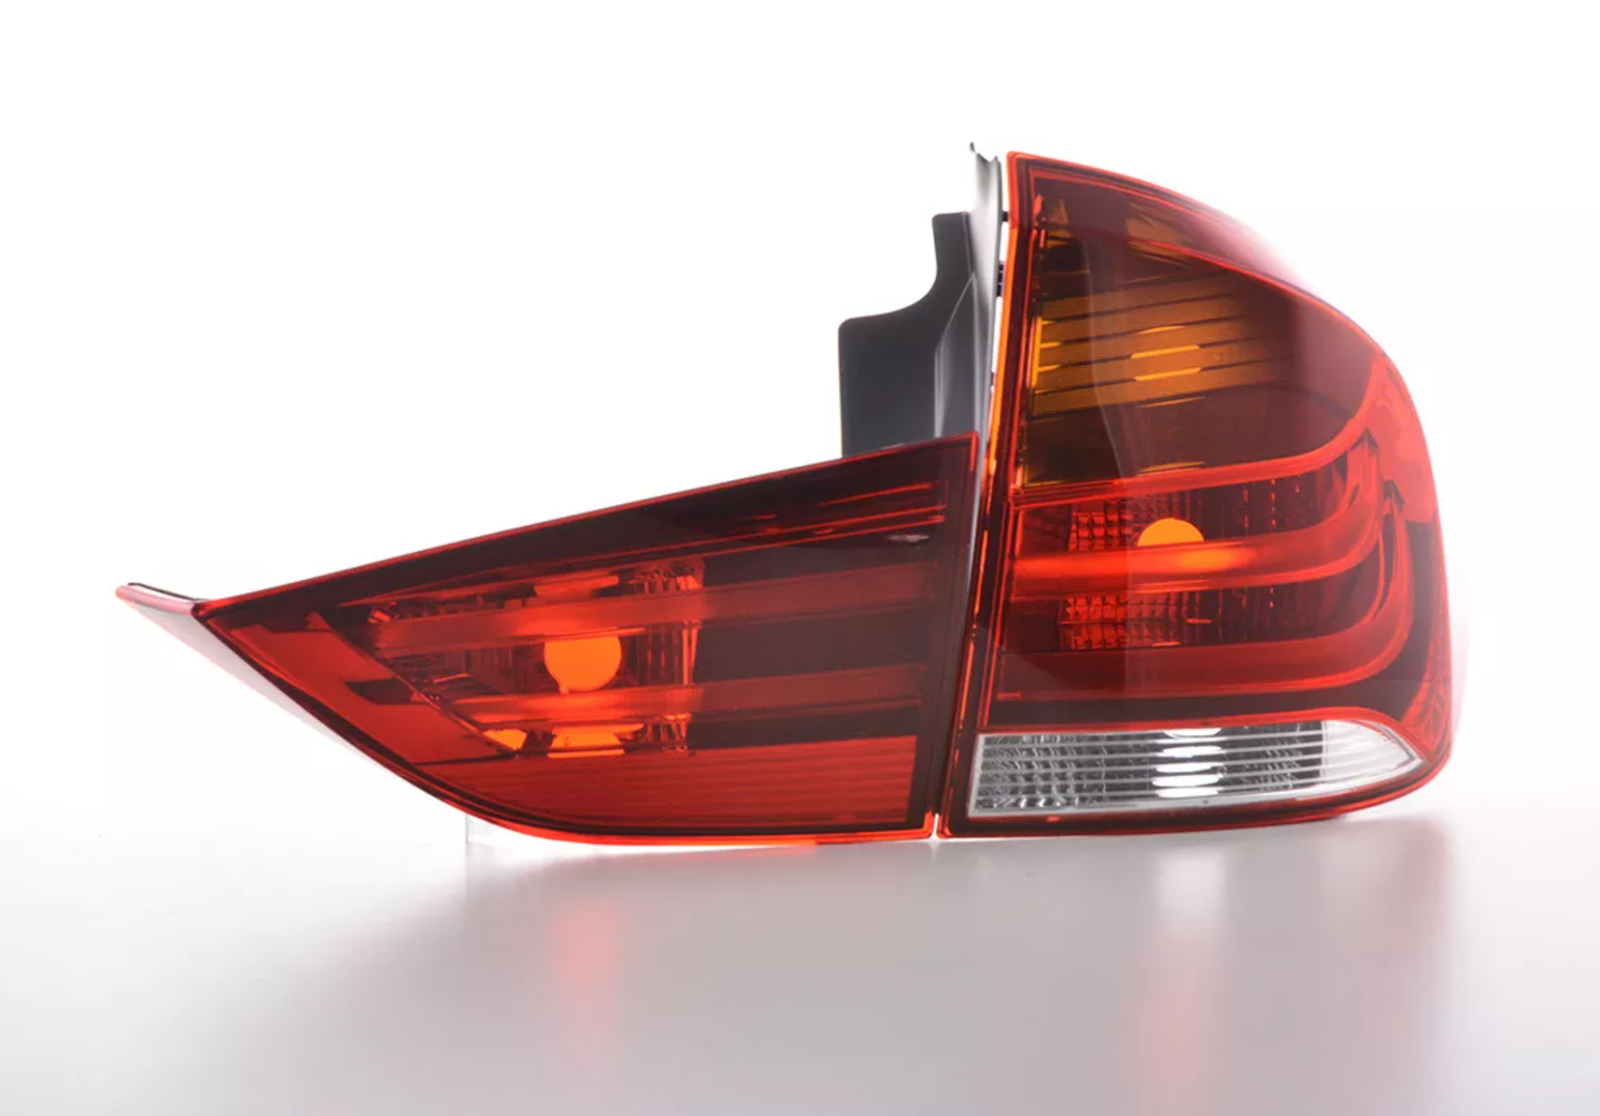 FK Set LED Lightbar REAR Lights Tail BMW X1 E84 09-13 red / clear LHD - LJ Automotive